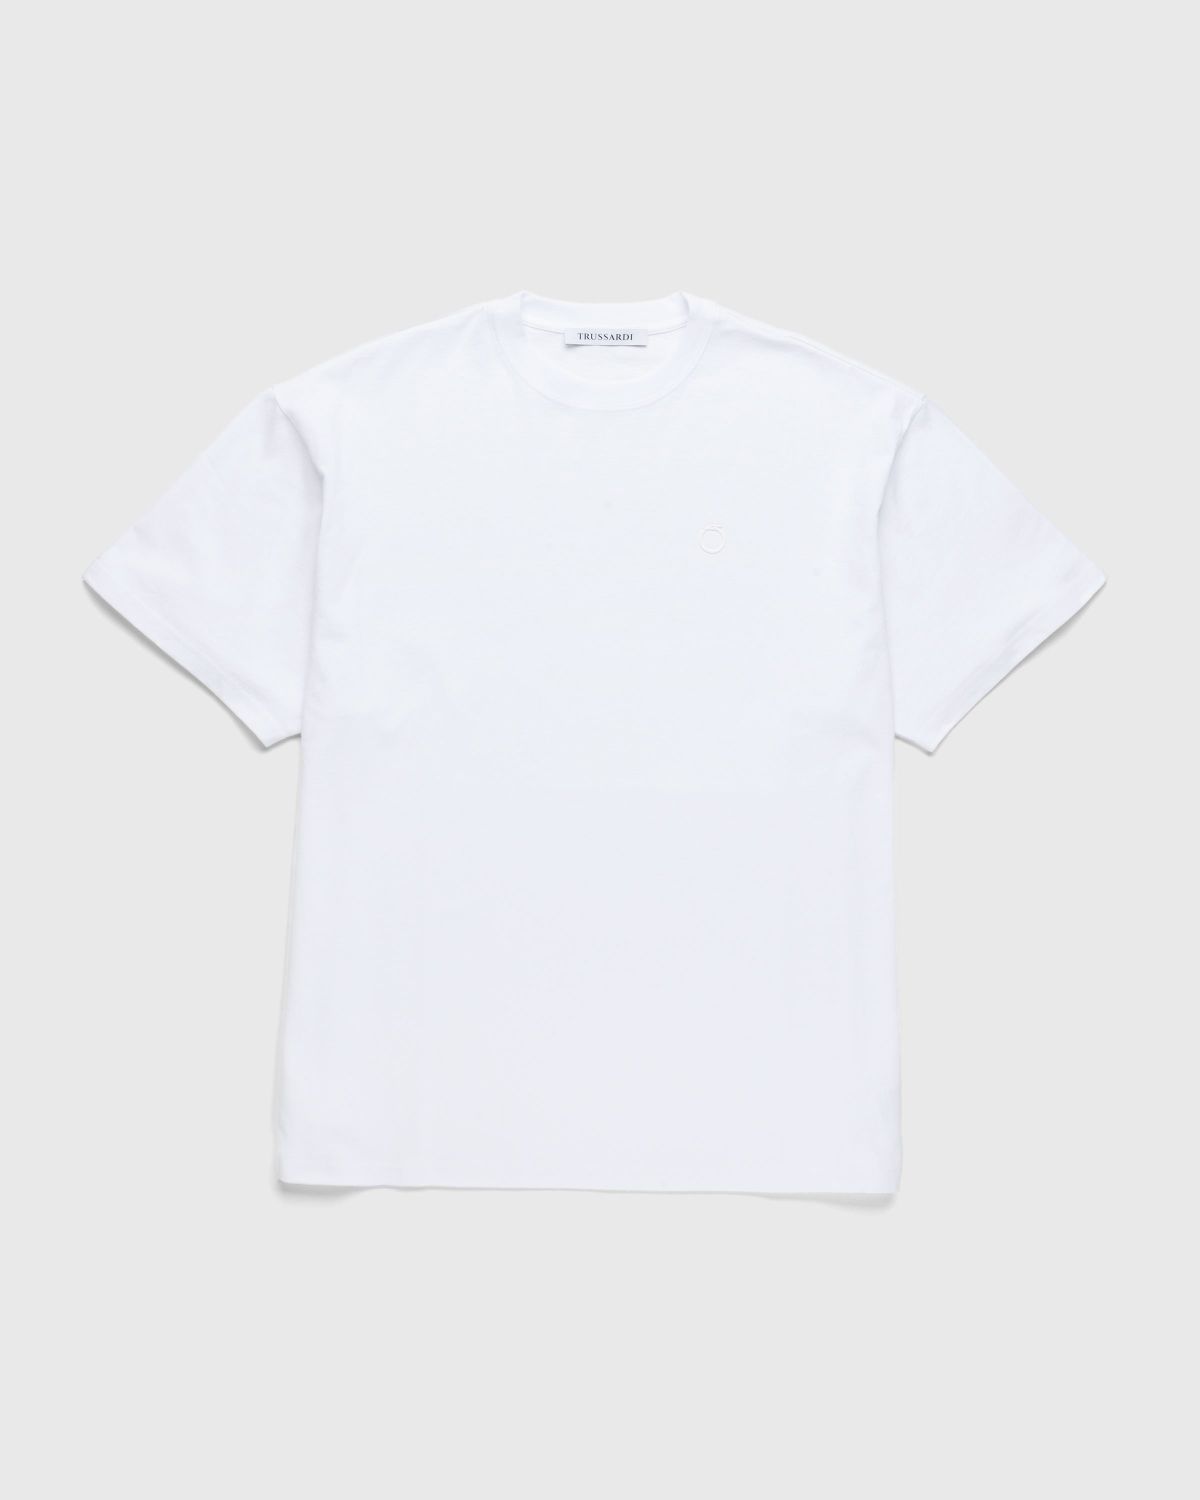 Trussardi – Greyhound T-Shirt White - T-Shirts - White - Image 1